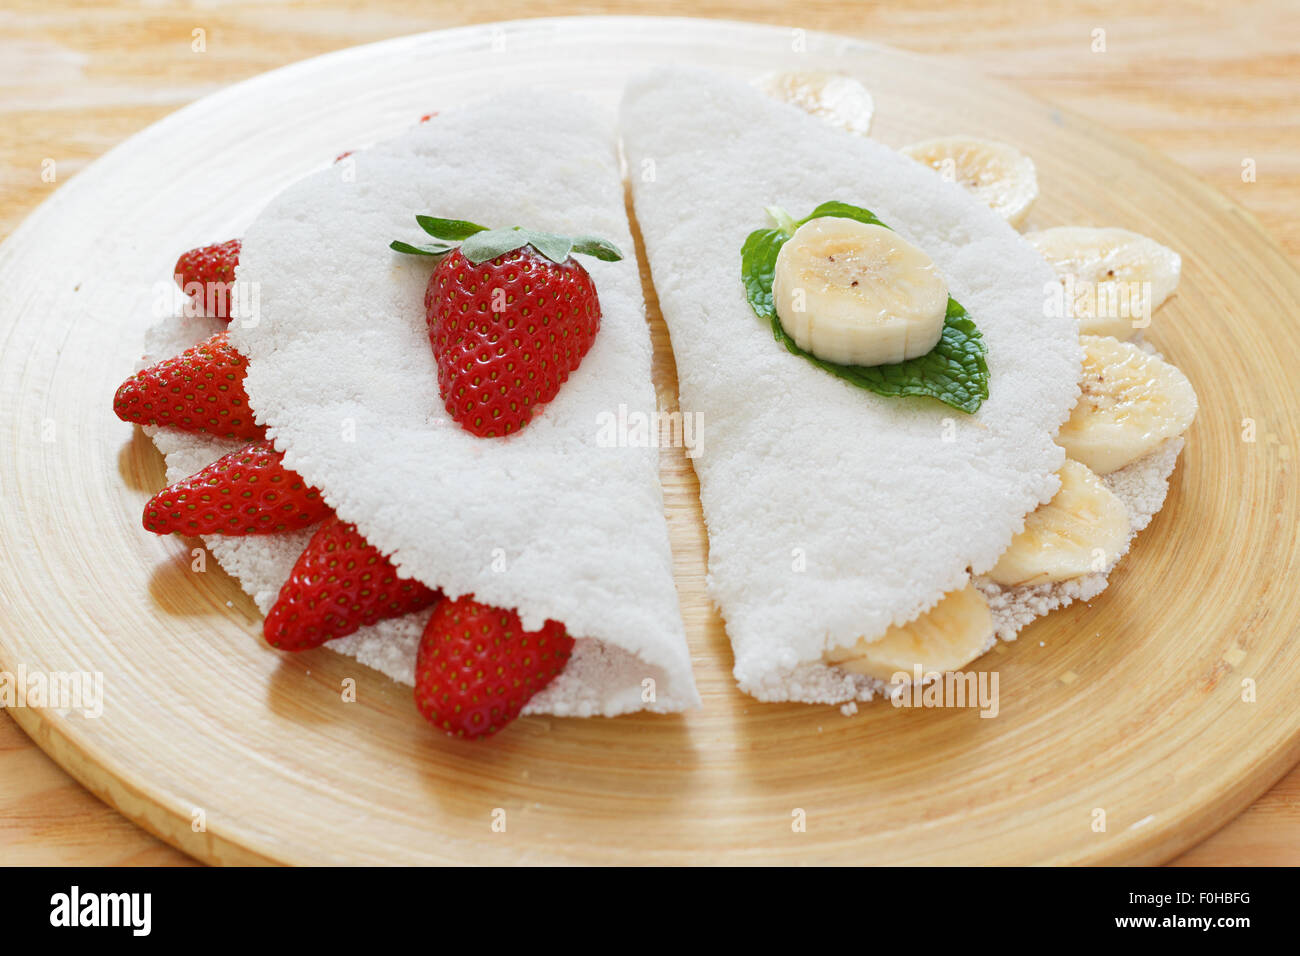 Casabe (bammy, beiju, bob, biju) - flatbread made from cassava (tapioca) with strawberry and banana. Selective focus Stock Photo